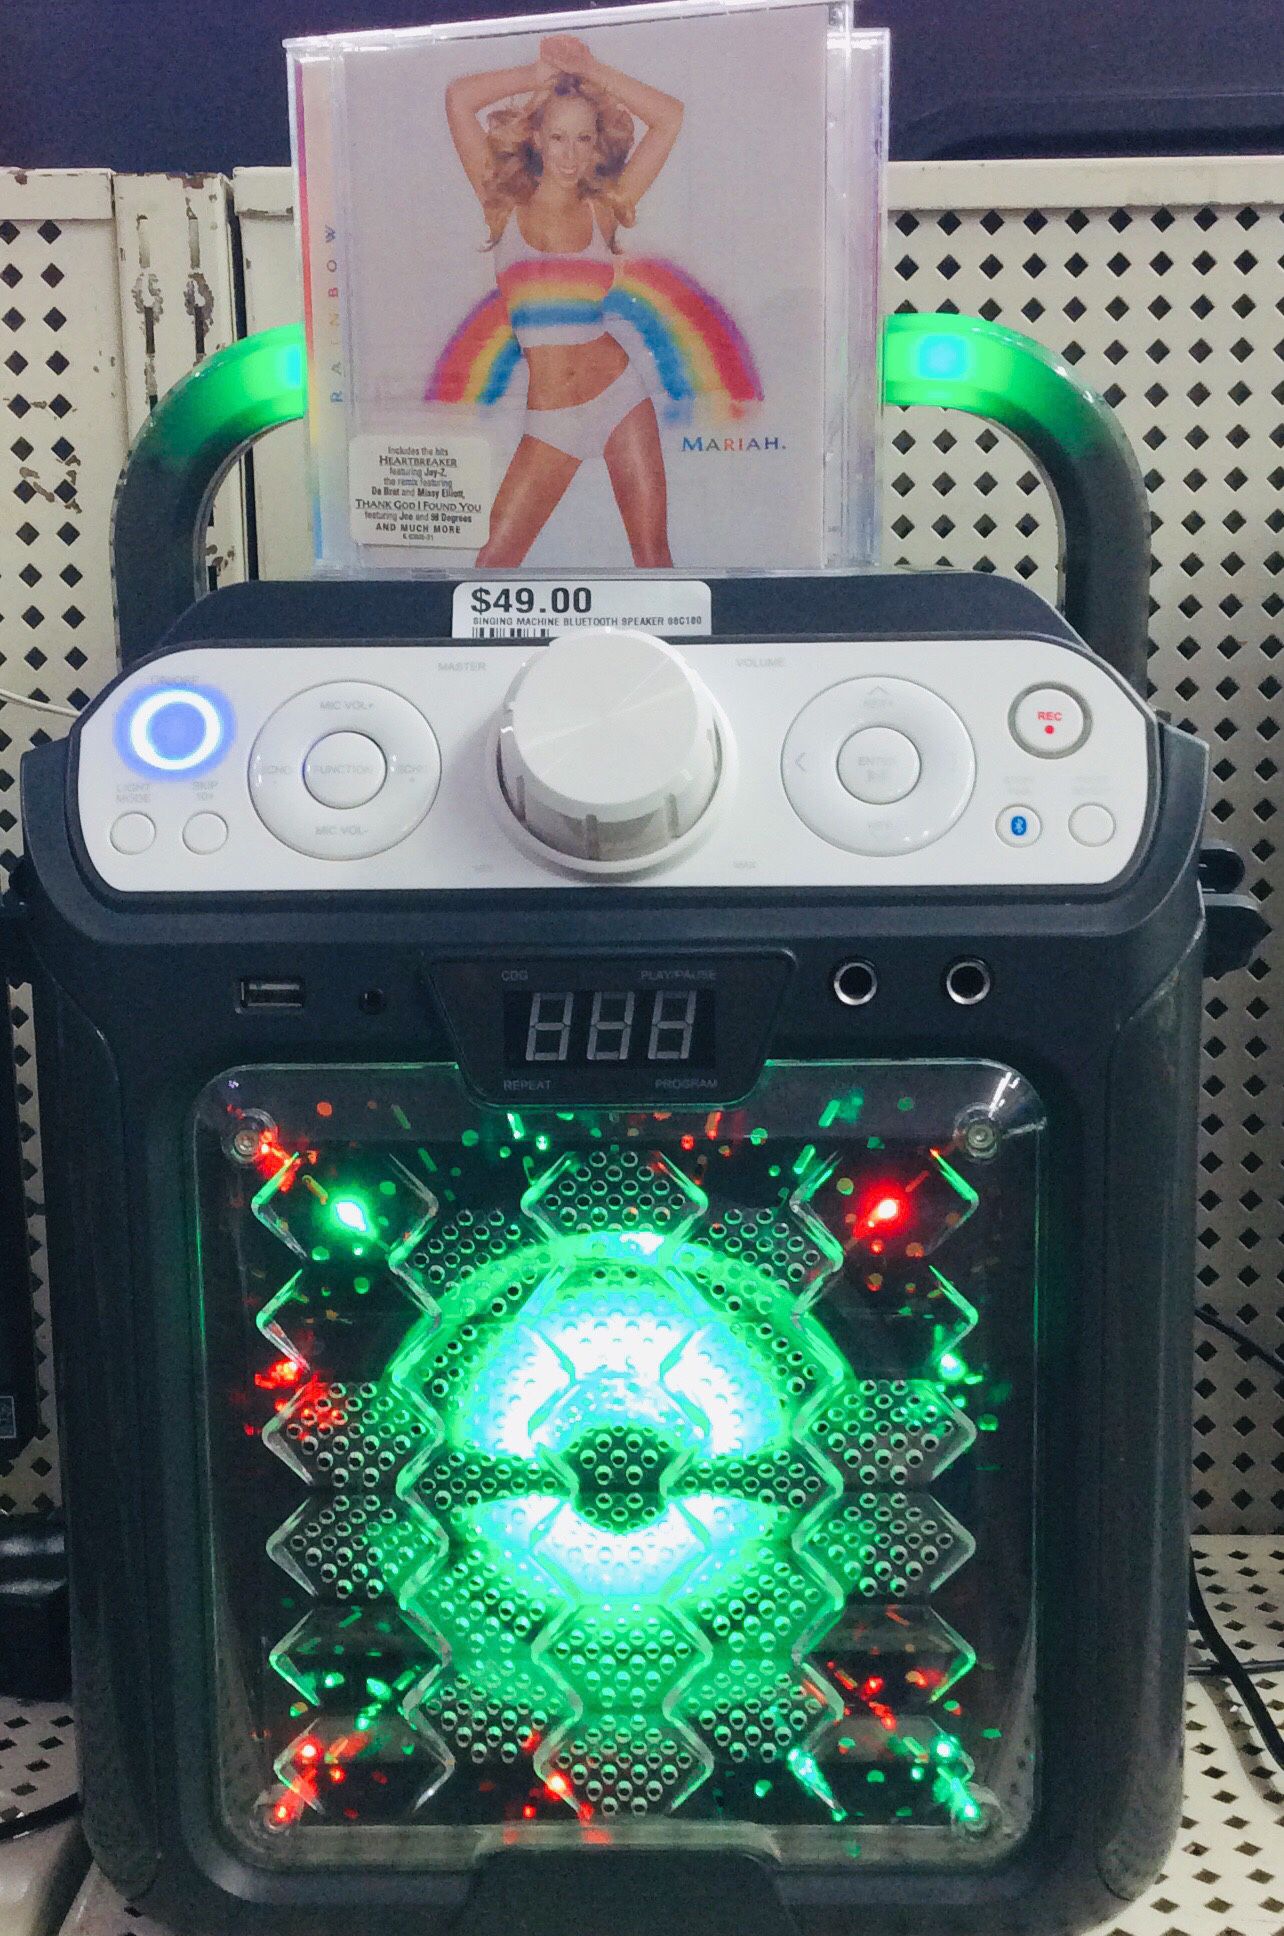 Karaoke Machine 